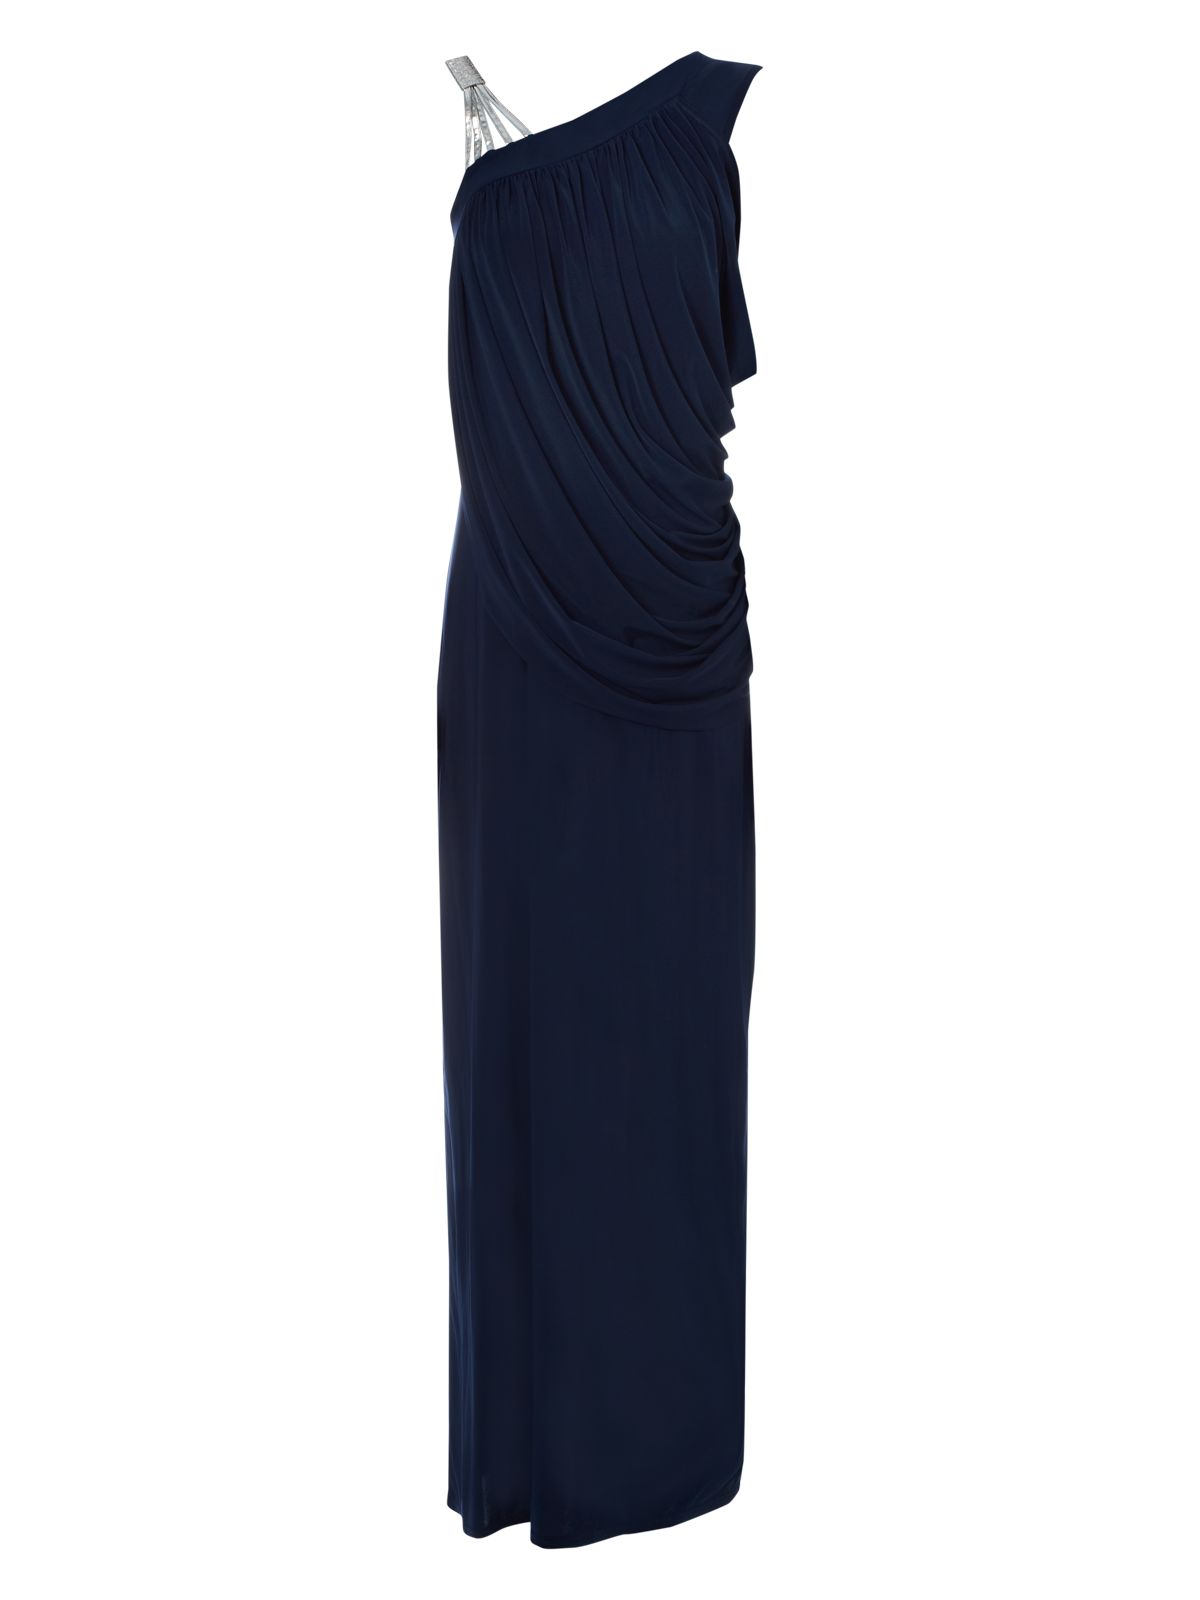 Jane Norman Strap Maxi Dress in Blue | Lyst